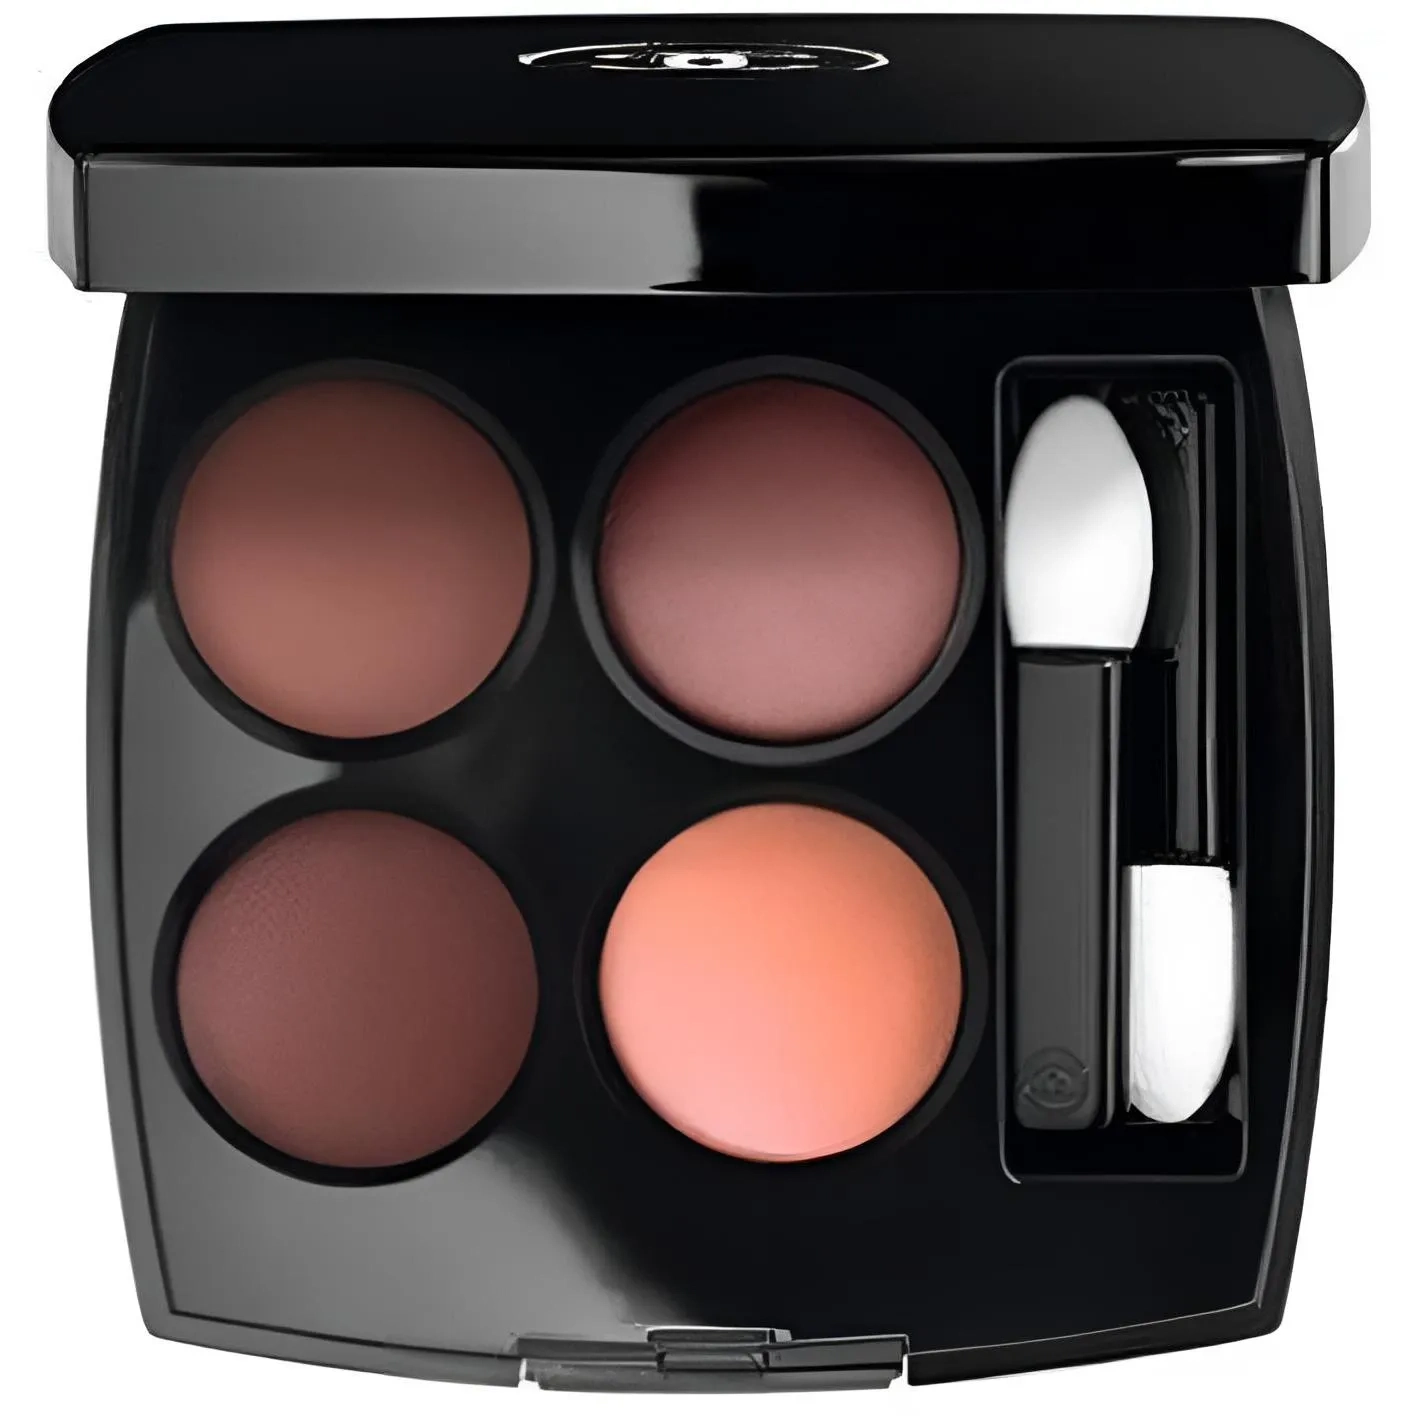 Chanel - Ombre Premiere Laque Longwear Liquid Eyeshadow 6ml/0.2oz - Eye  Color | Free Worldwide Shipping | Strawberrynet CAMEN